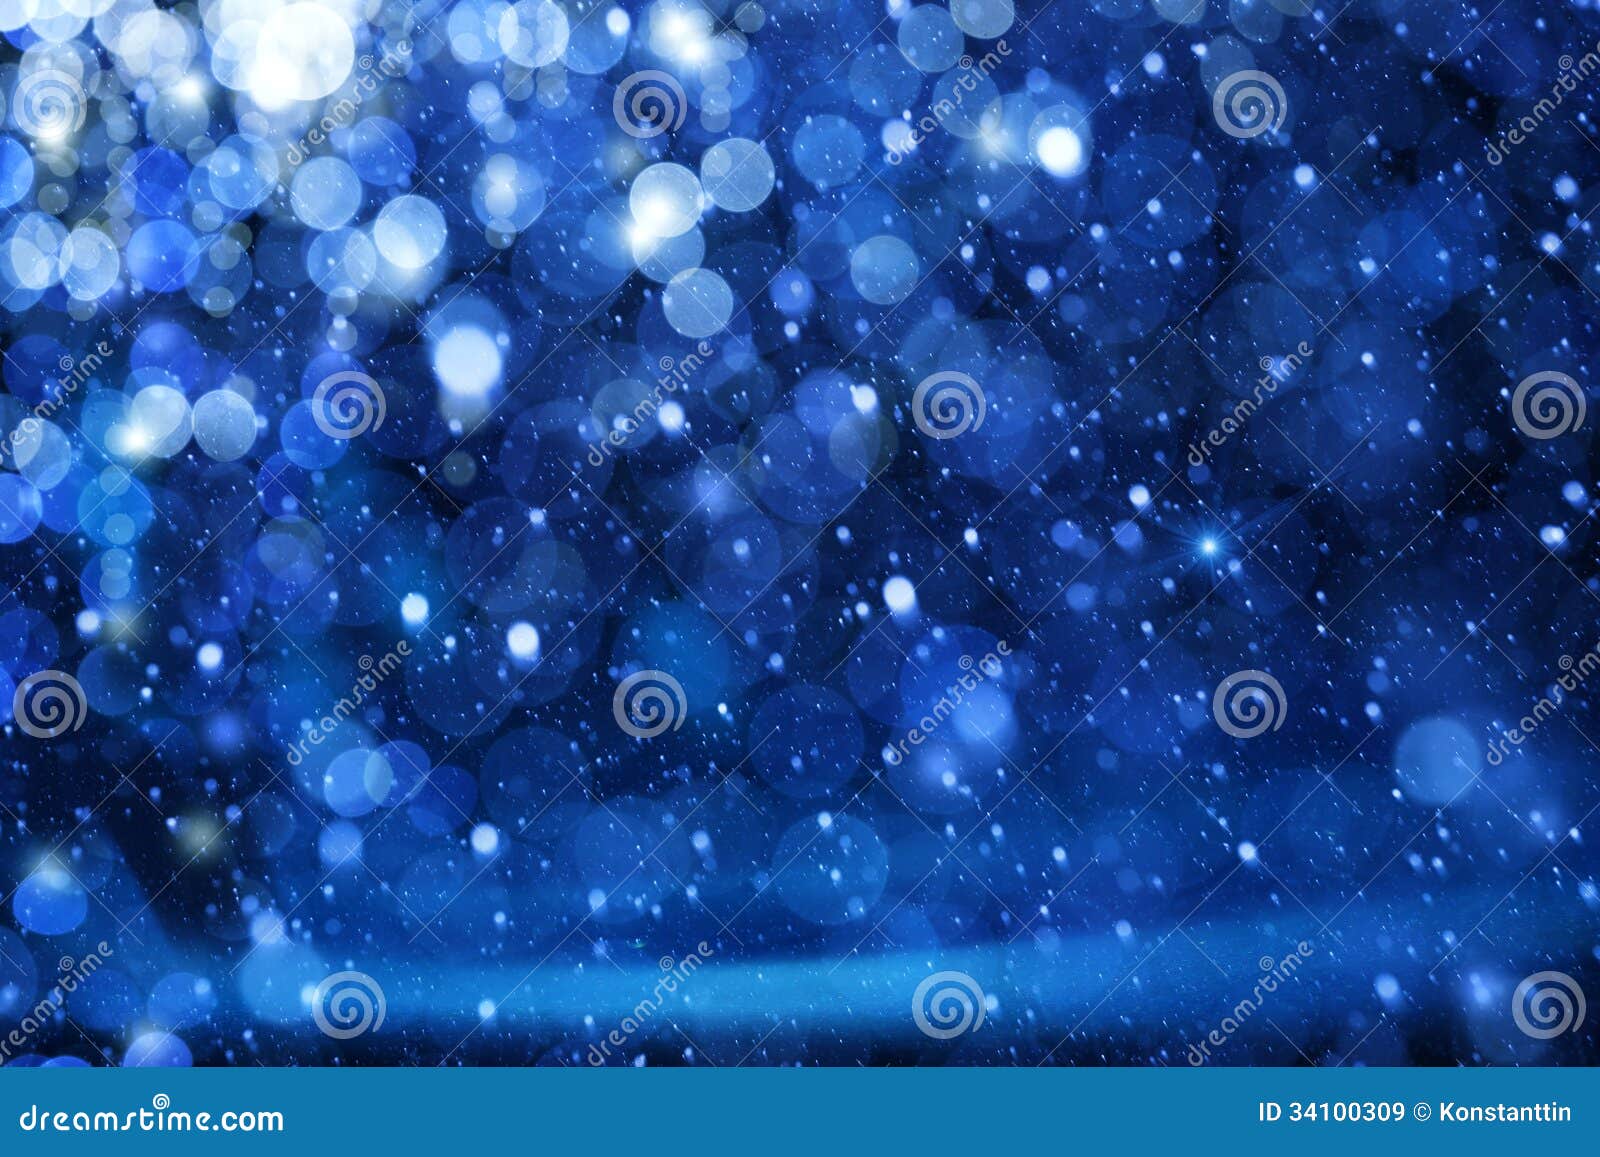 art christmas lights on blue background